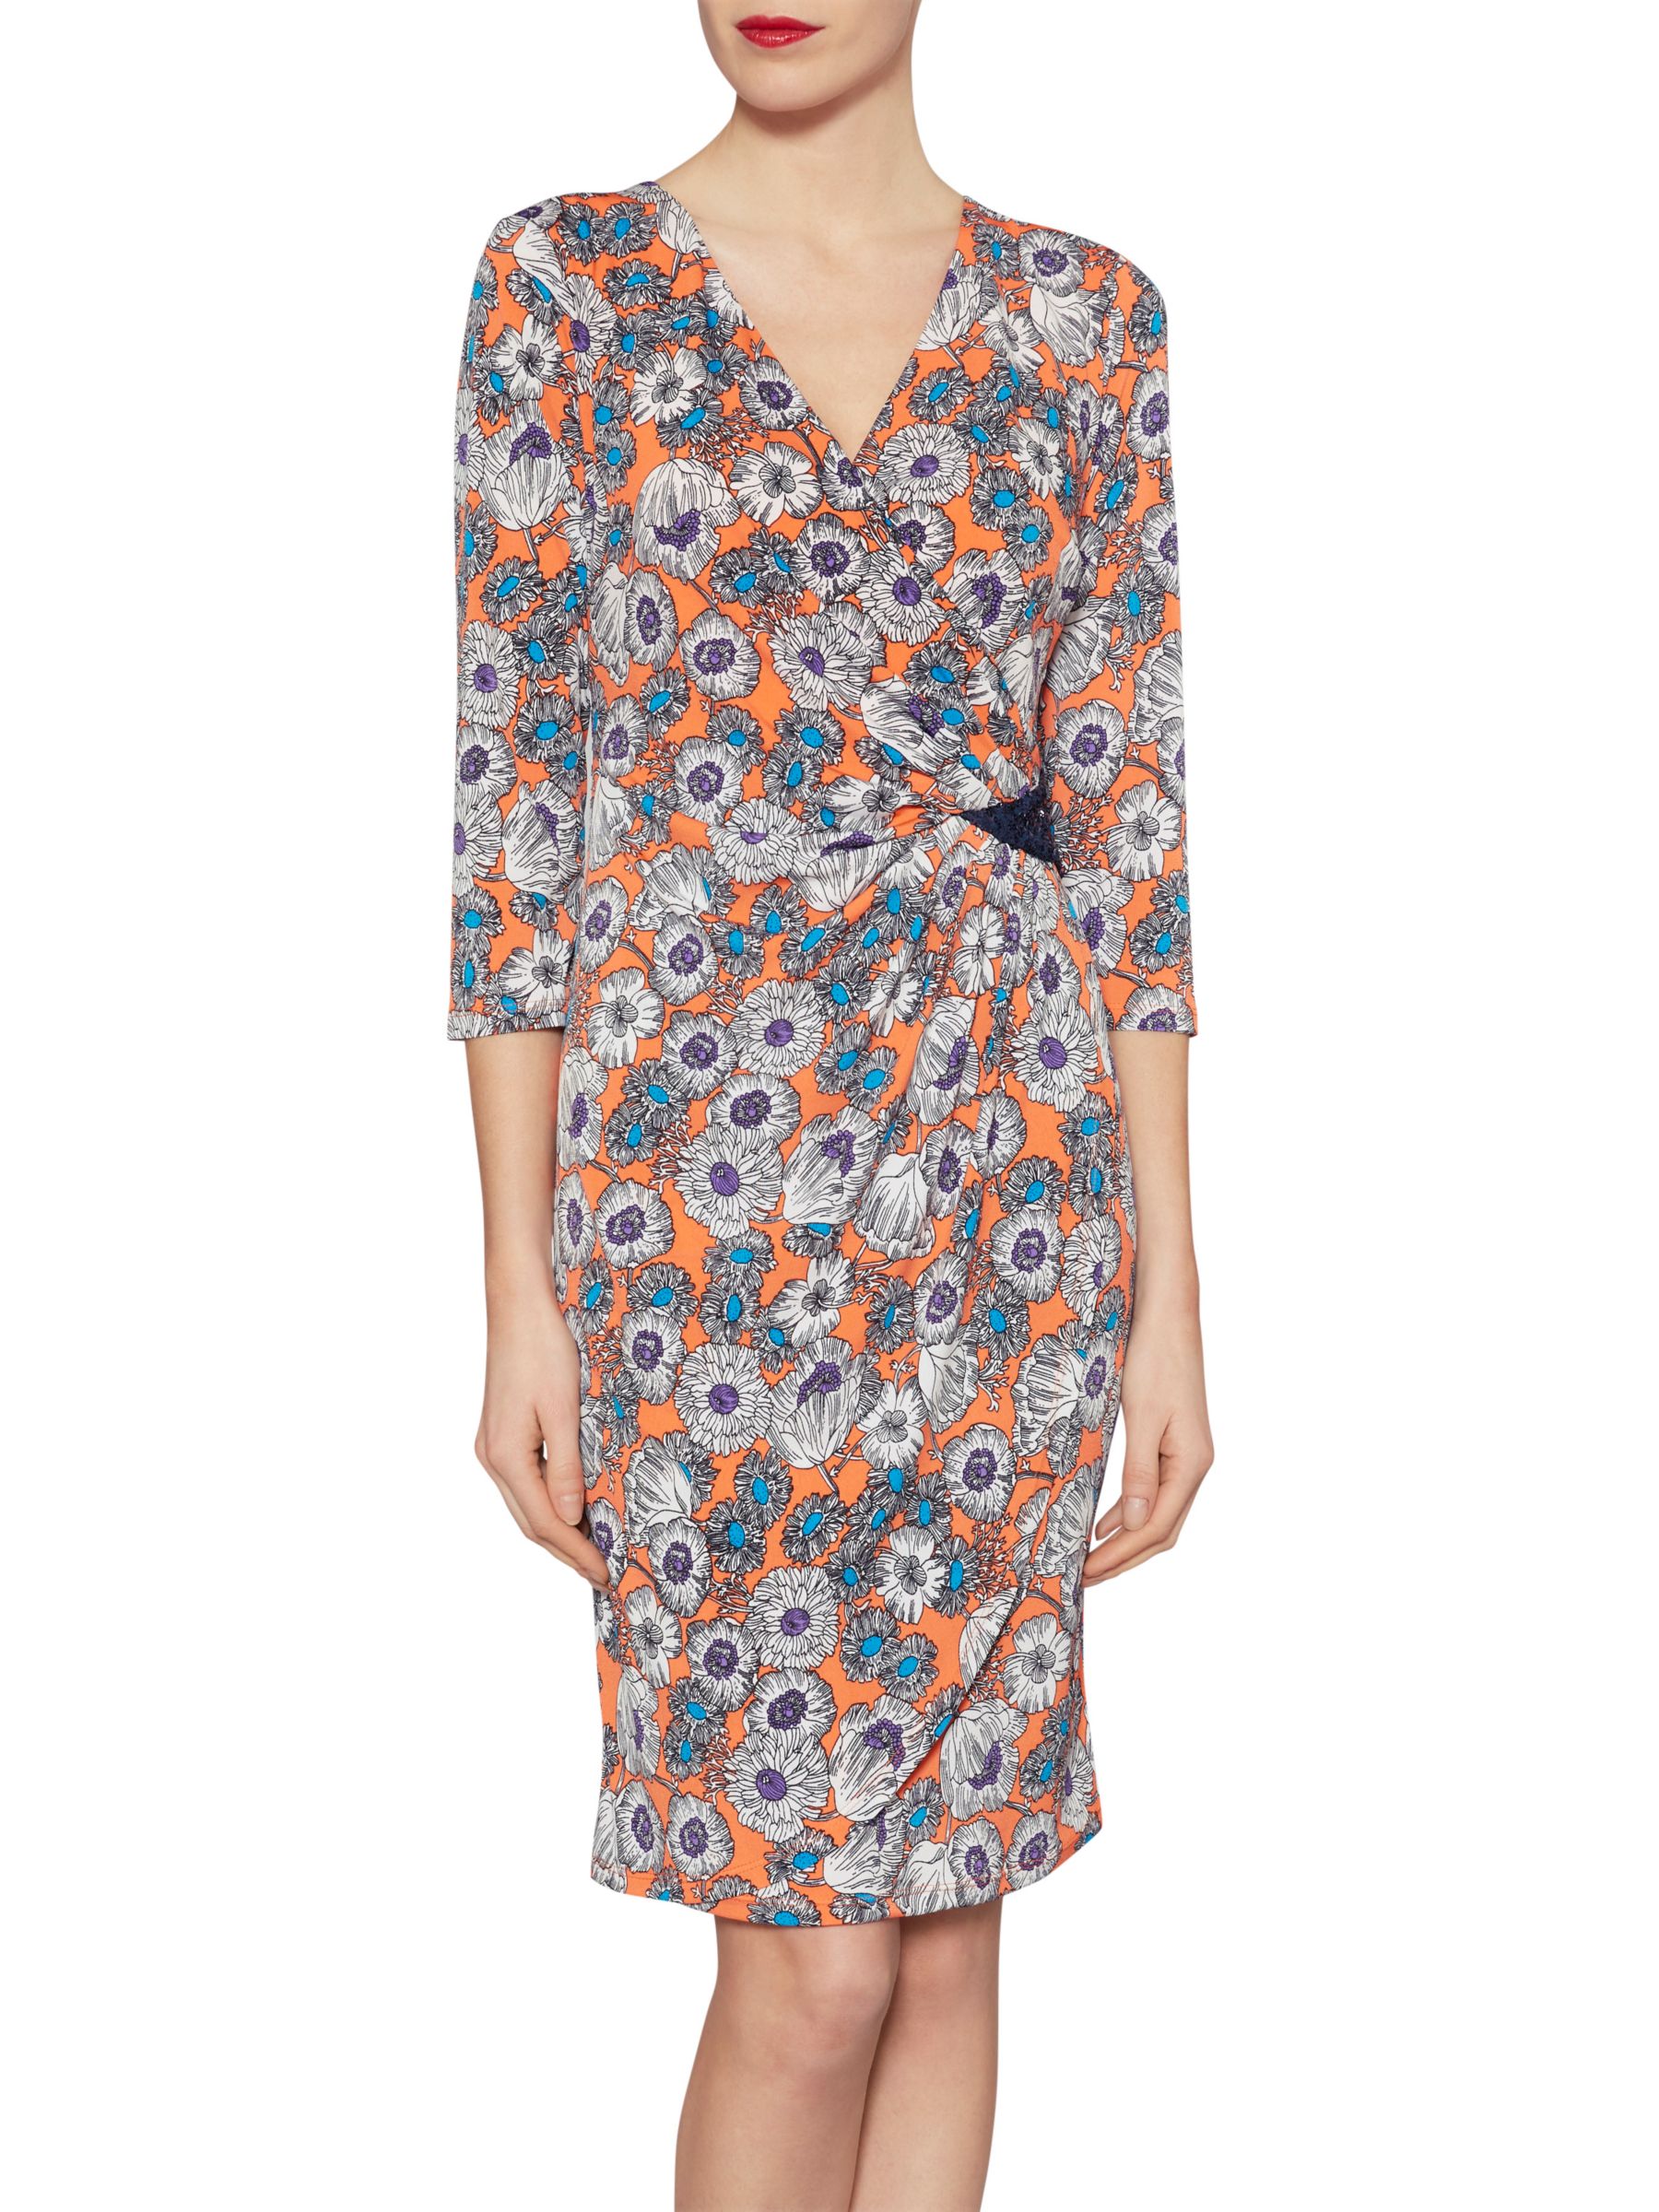 Gina Bacconi Flower Print Jersey Dress With Sequins, Orange